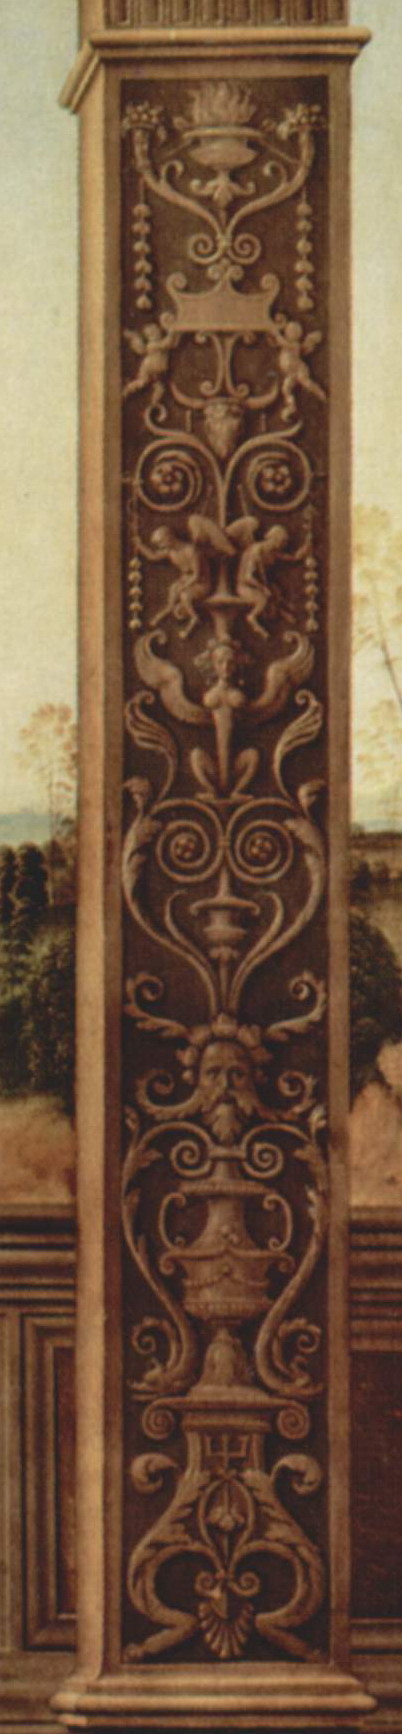 Pietro Perugino 049 fragment